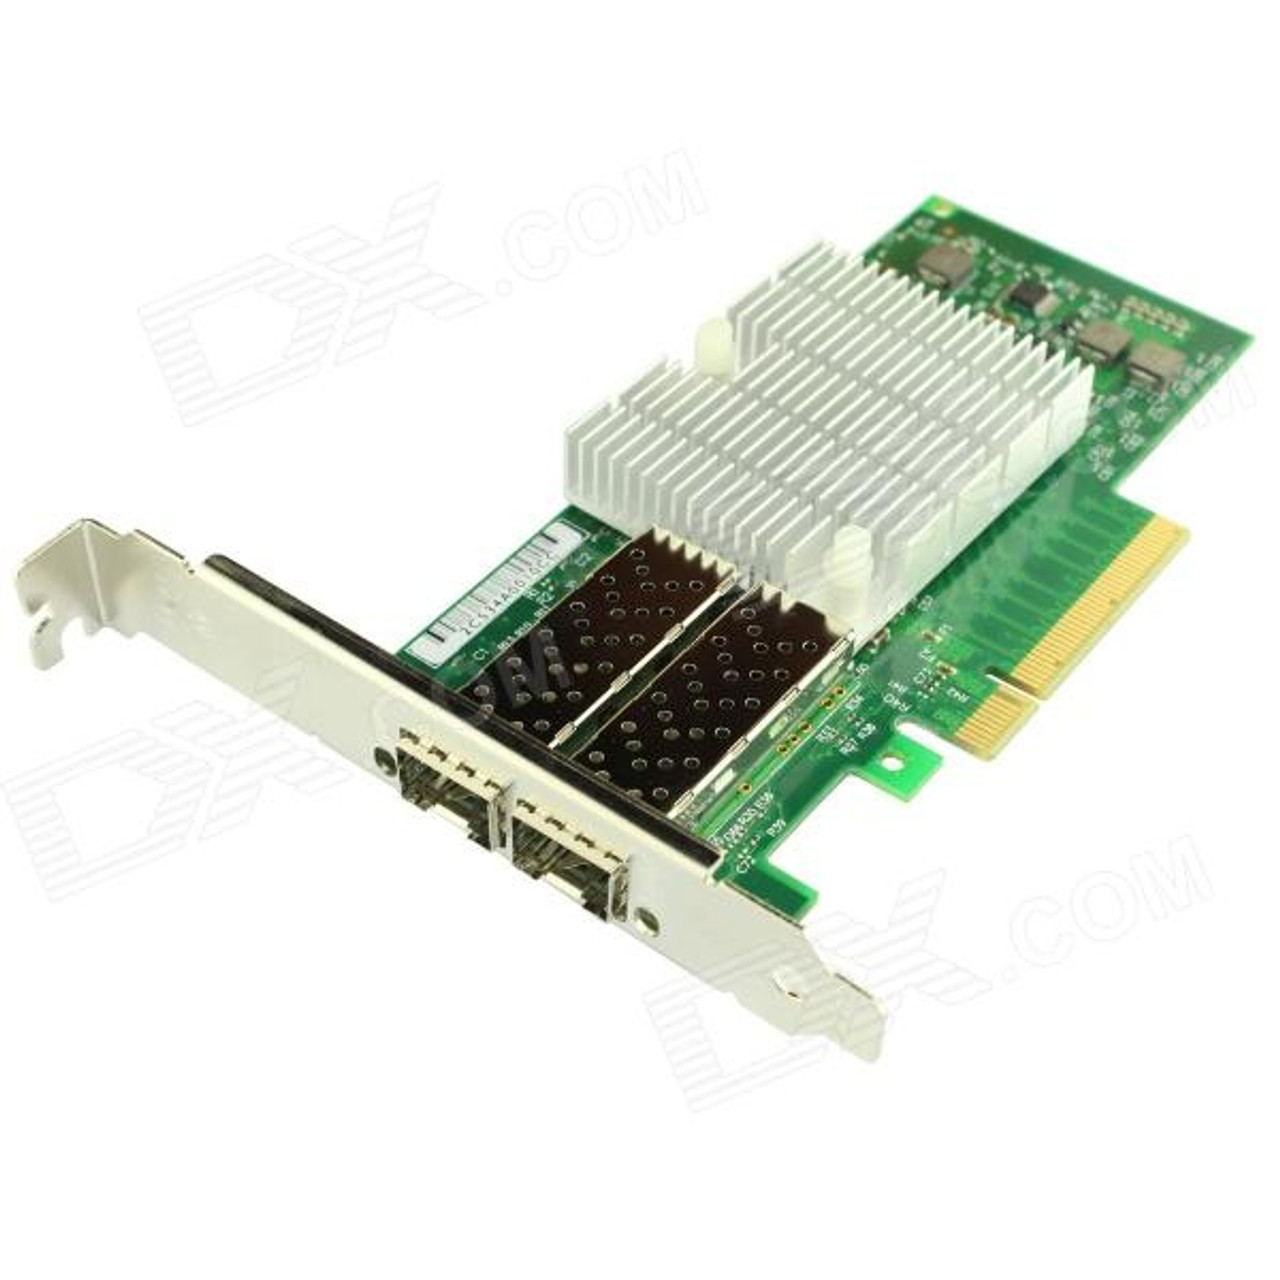 718577-001 - HP Lpe1605 16GB Dual Port PCI-Express Fibre Channel Mezzanine Host Bus Adapter